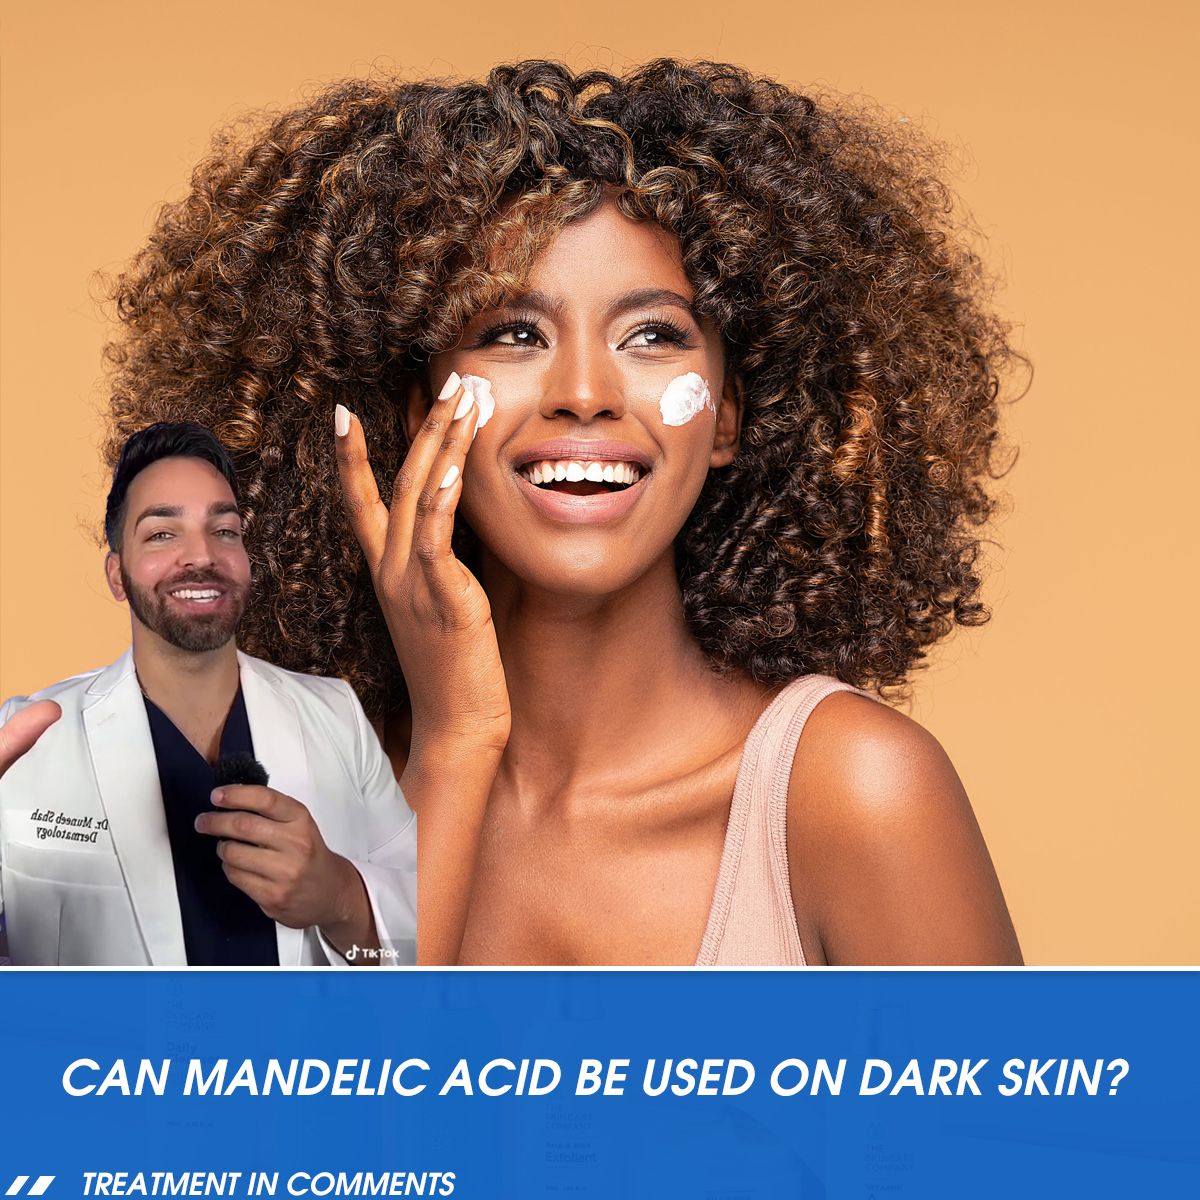 Can mandelic acid be used on dark skin?